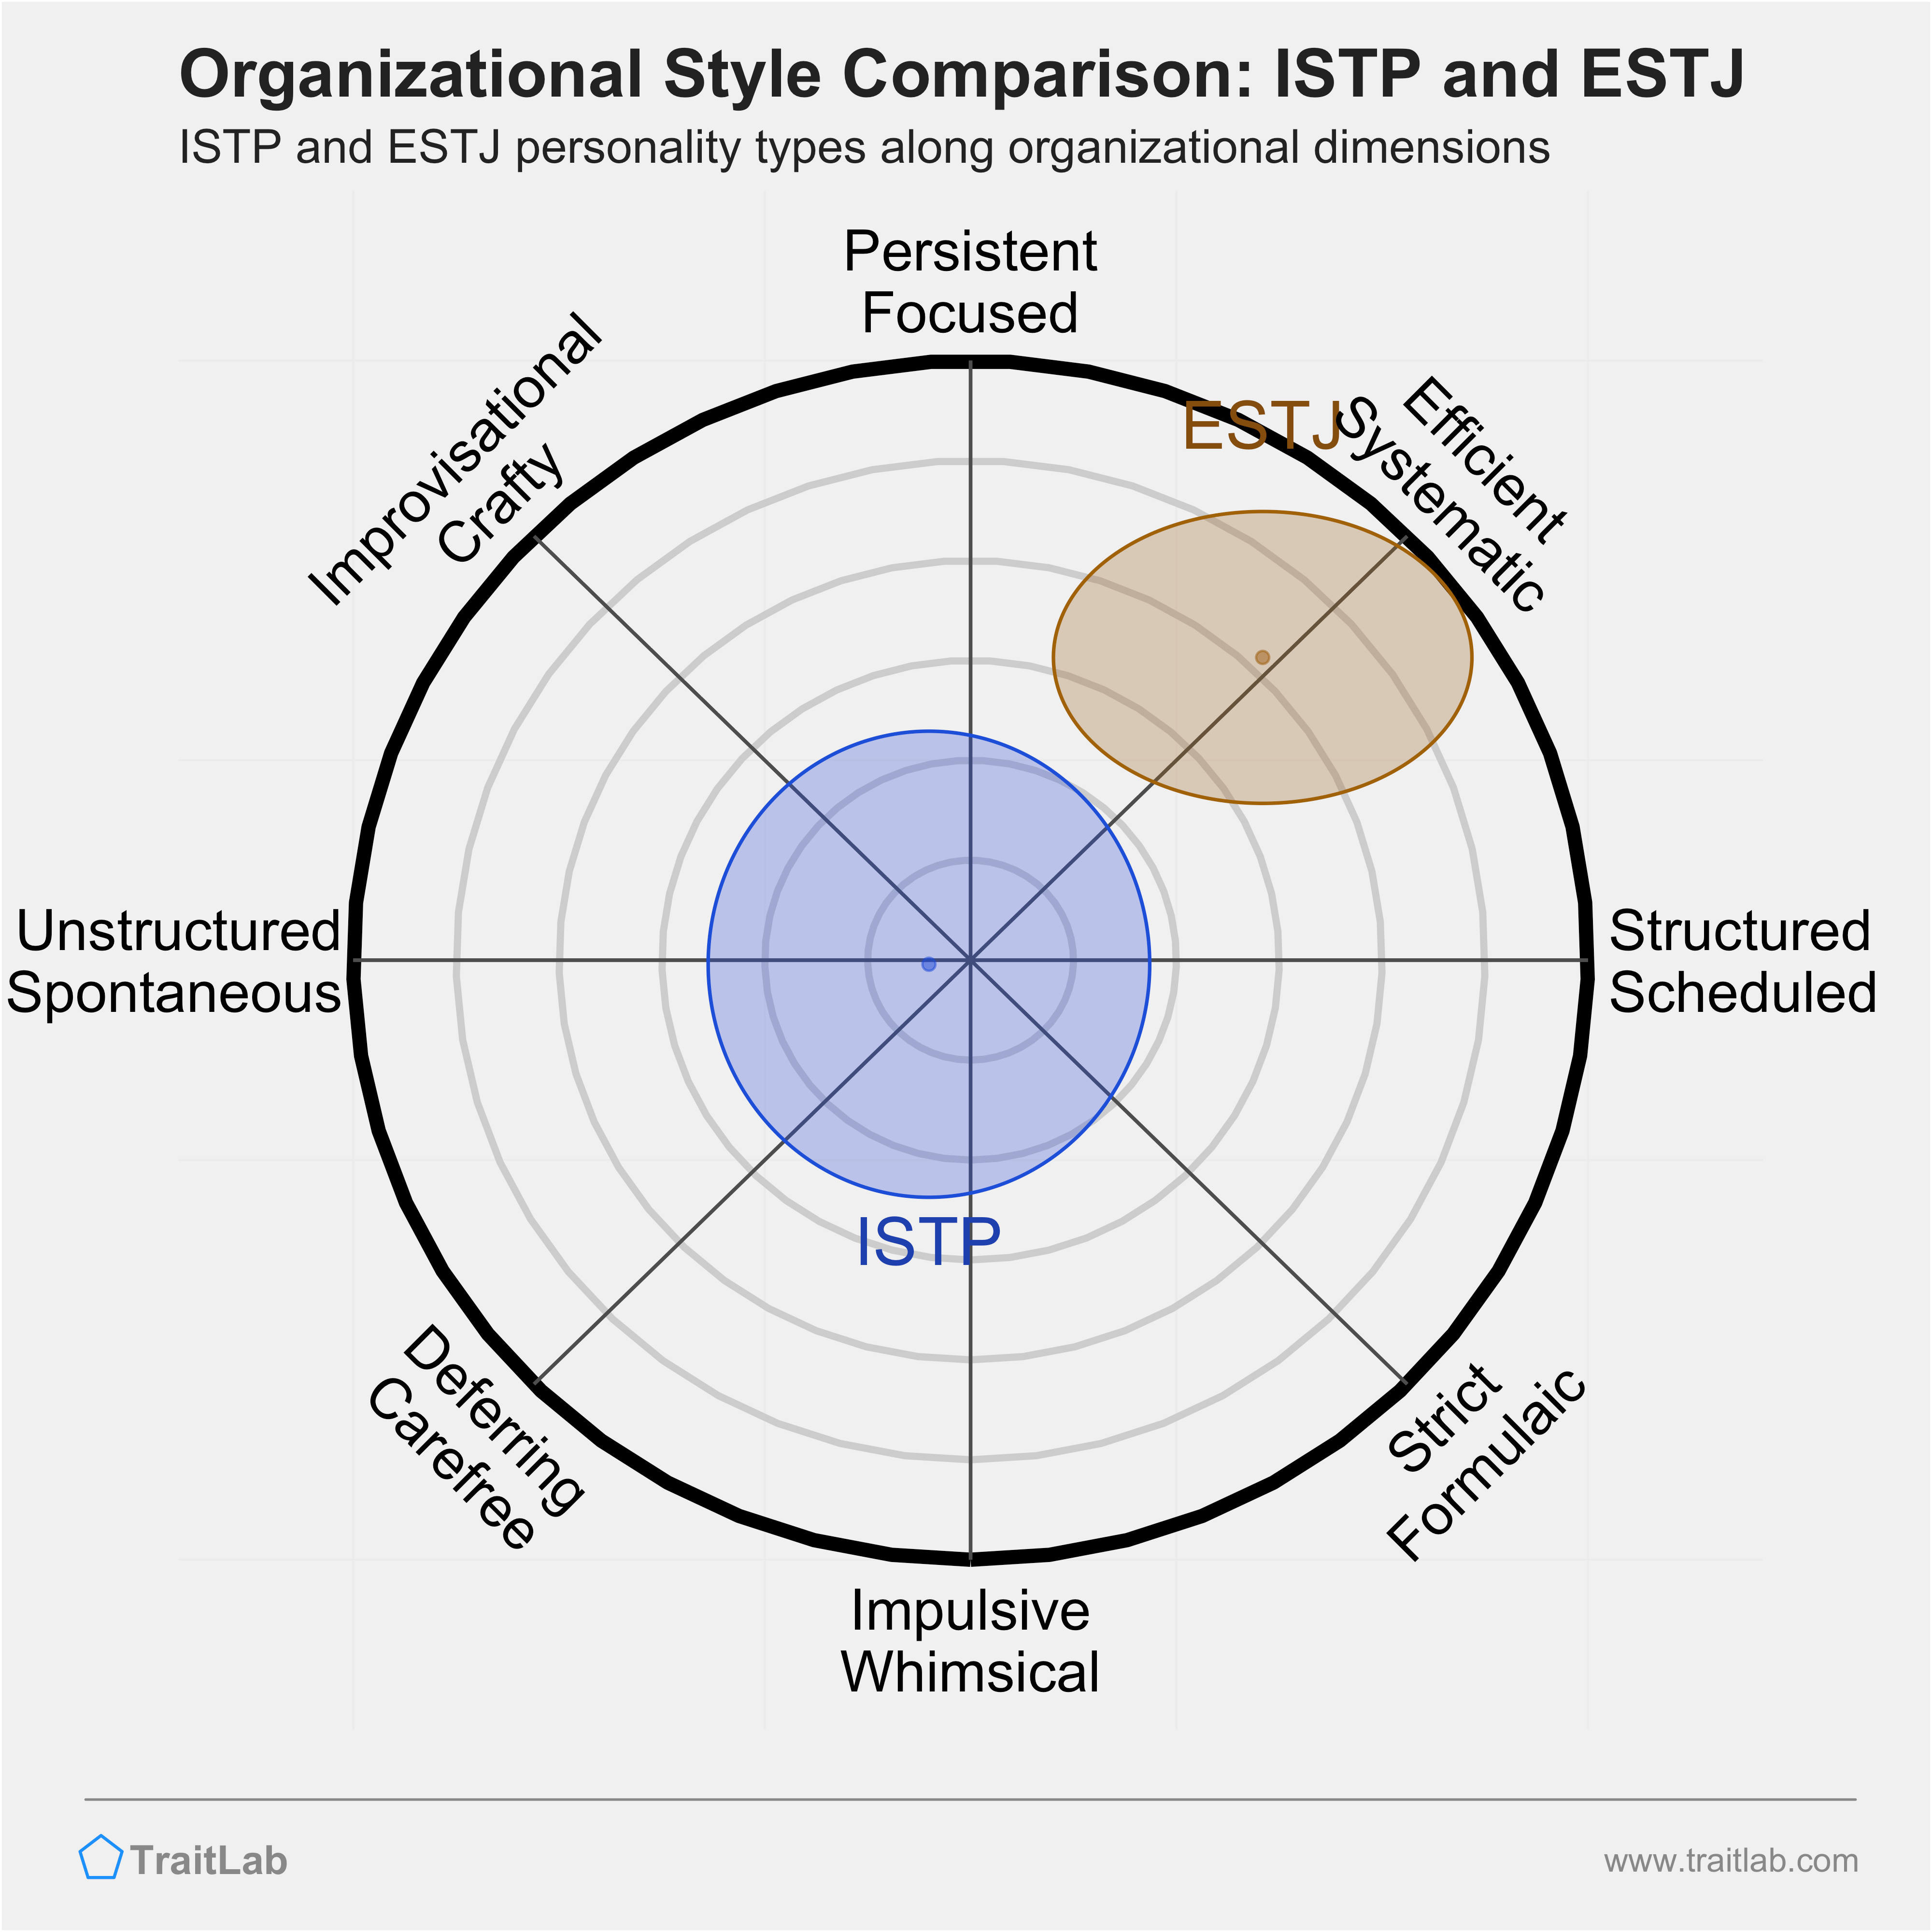 ISTP and ESTJ comparison across organizational dimensions